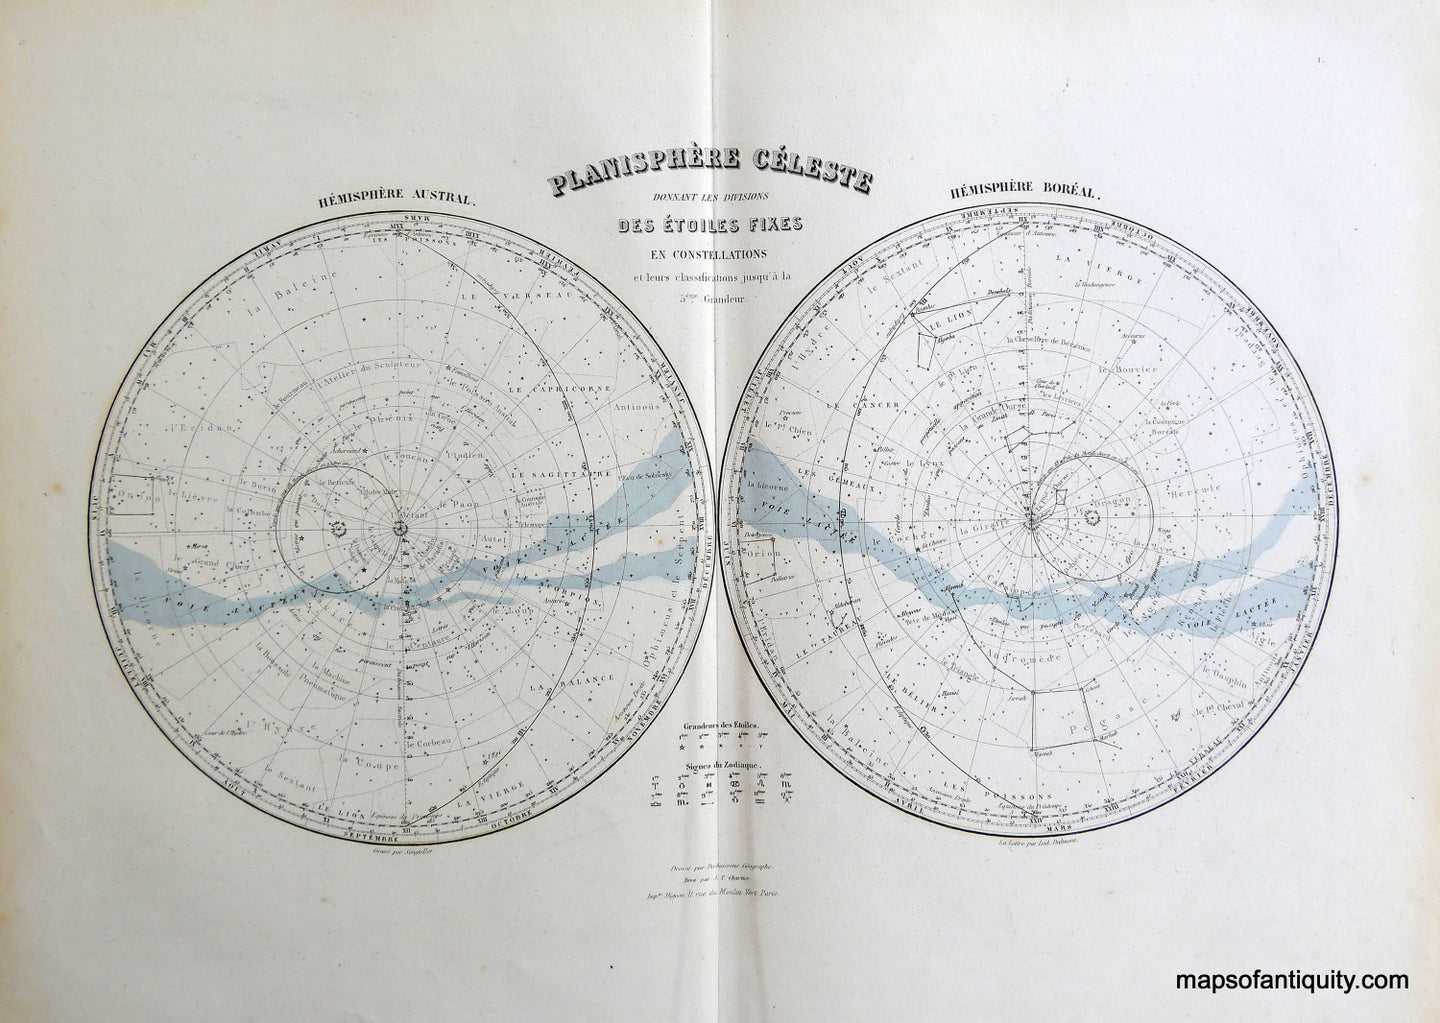 Antique-Hand-Colored-Map-Planisphere-Celeste-Hemisphere-Austral-Hemisphere-Boreal****-Celestial--1884-Migeon-Maps-Of-Antiquity